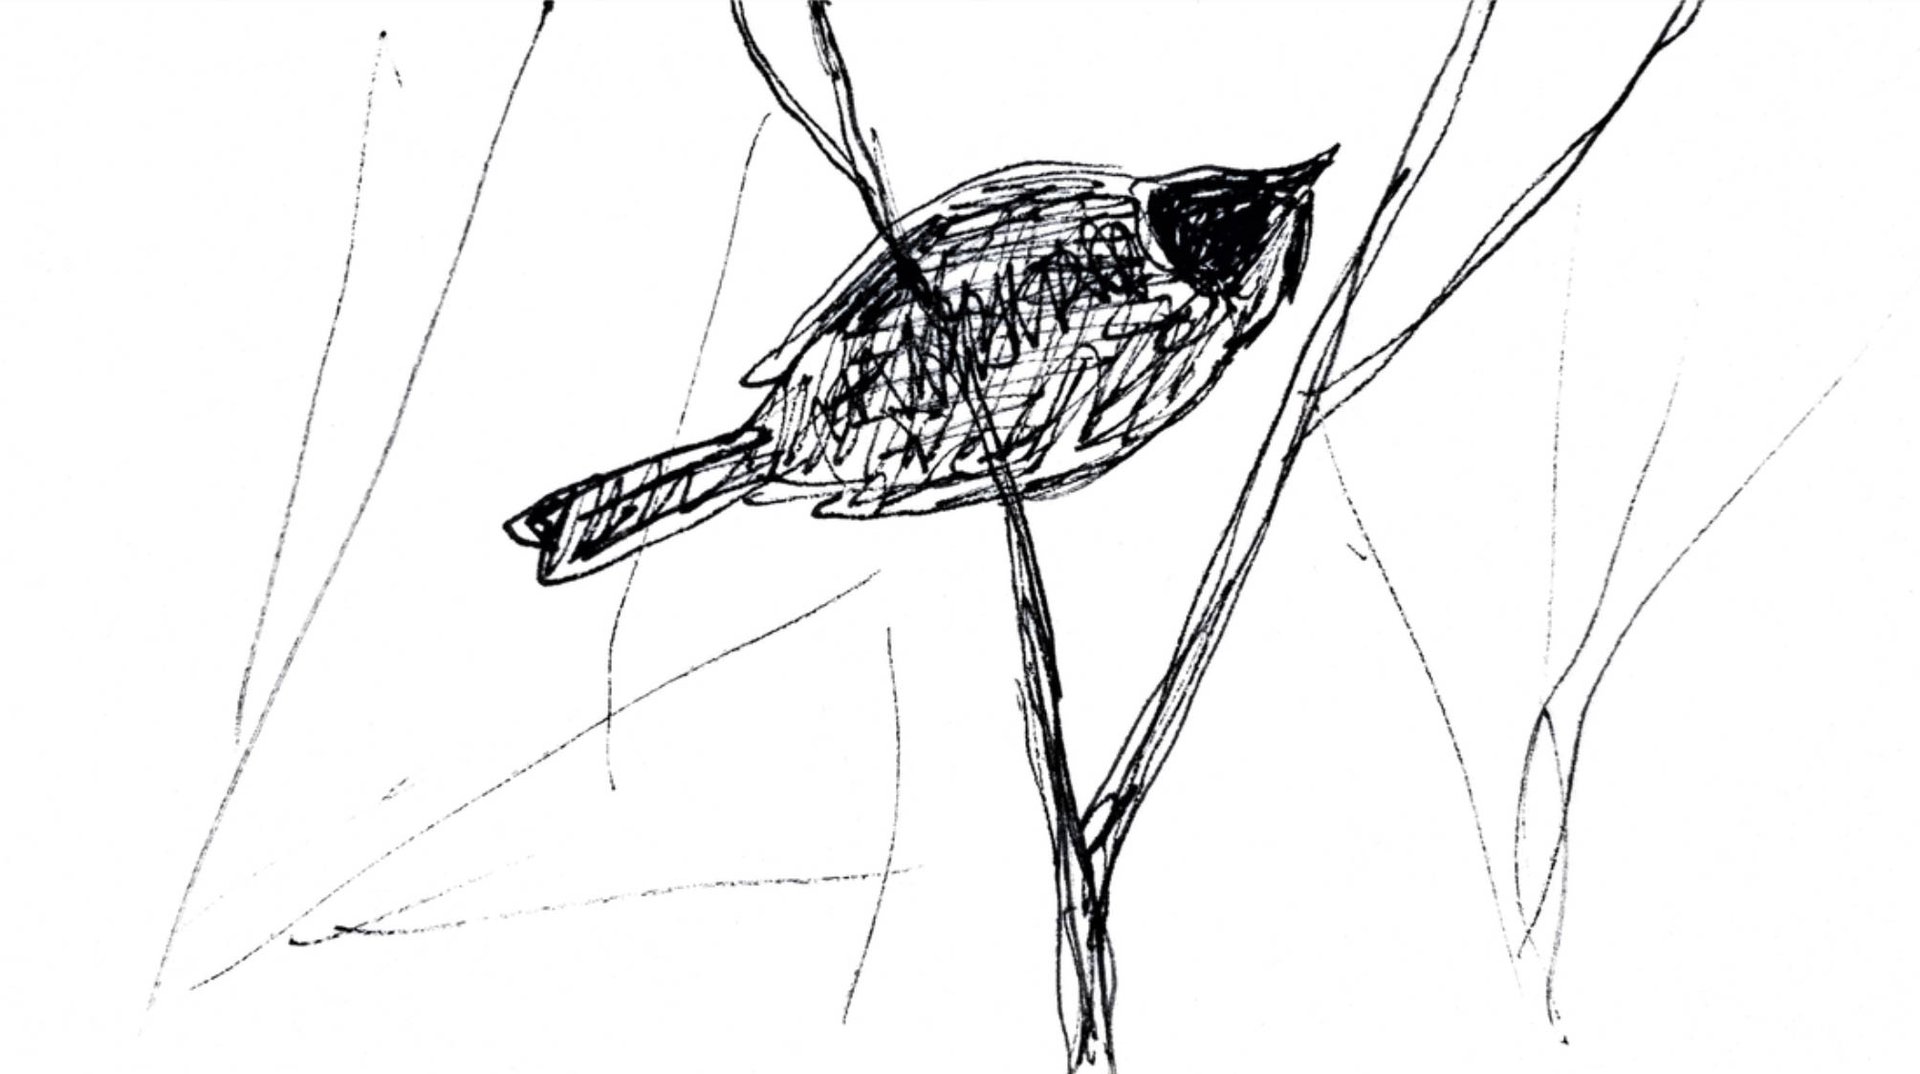 Bird on branch from below in black on white systems3.jpg